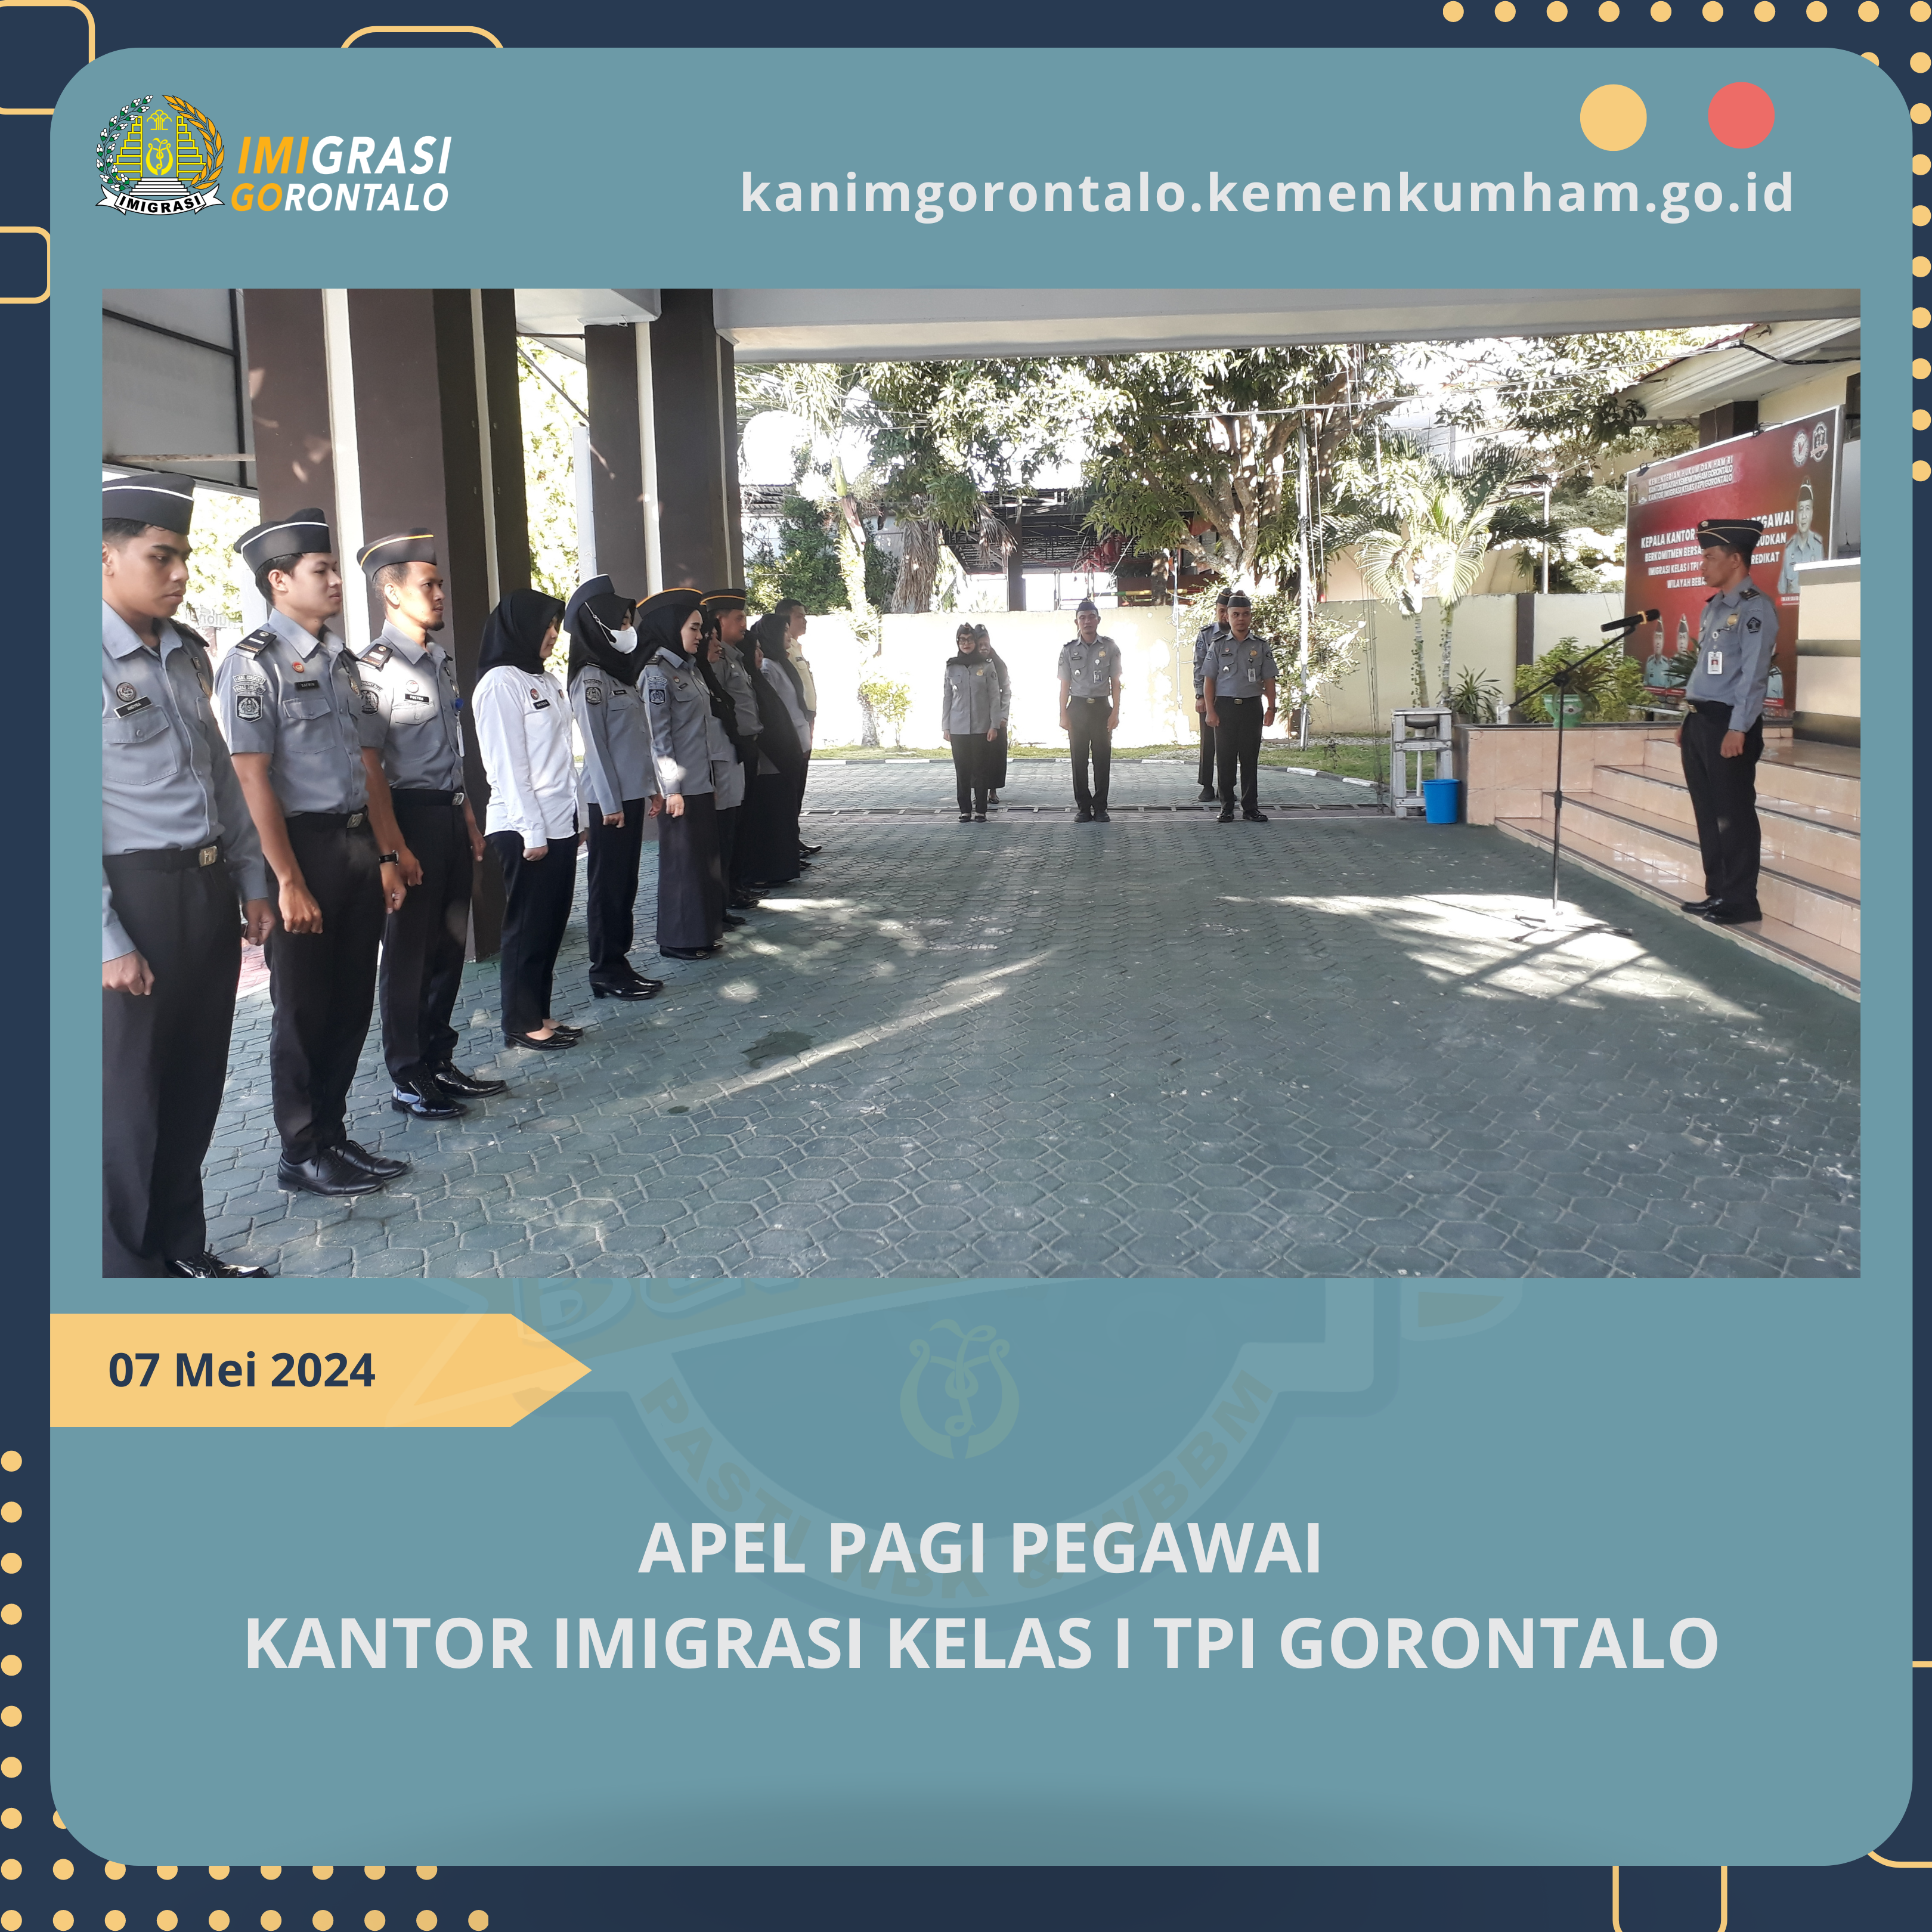 Pelaksanaan Apel Pagi Pegawai Kantor Imigrasi Kelas I TPI Gorontalo, Selasa, 7 Mei 2024